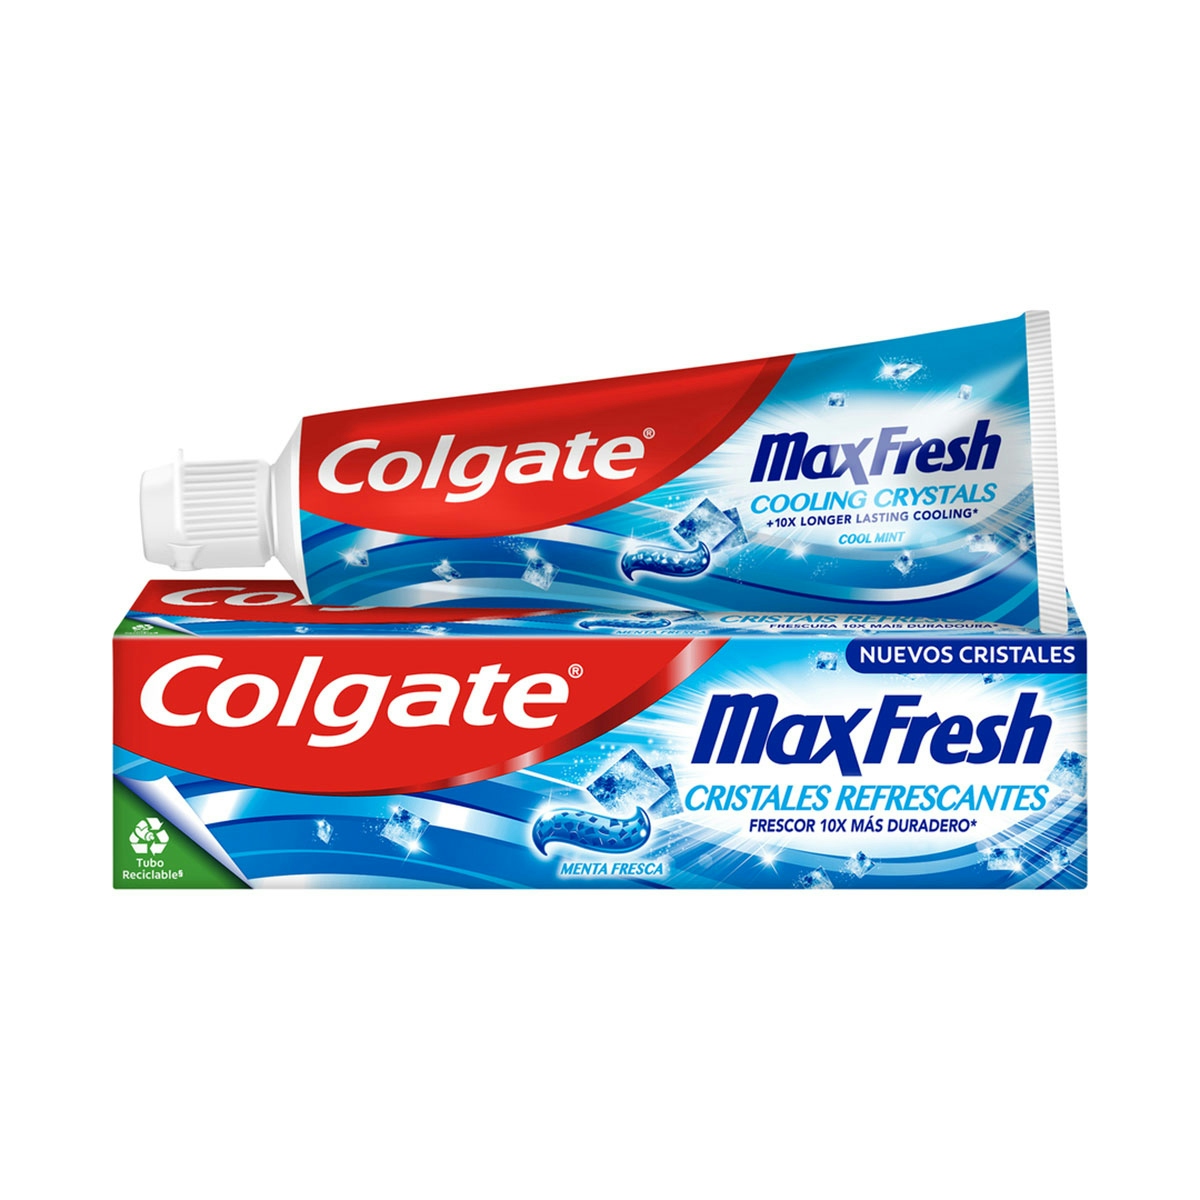 Pasta de dientes Colgate Max Fresh con cristales refrescantes, frescor duradero, menta fresca 75ml